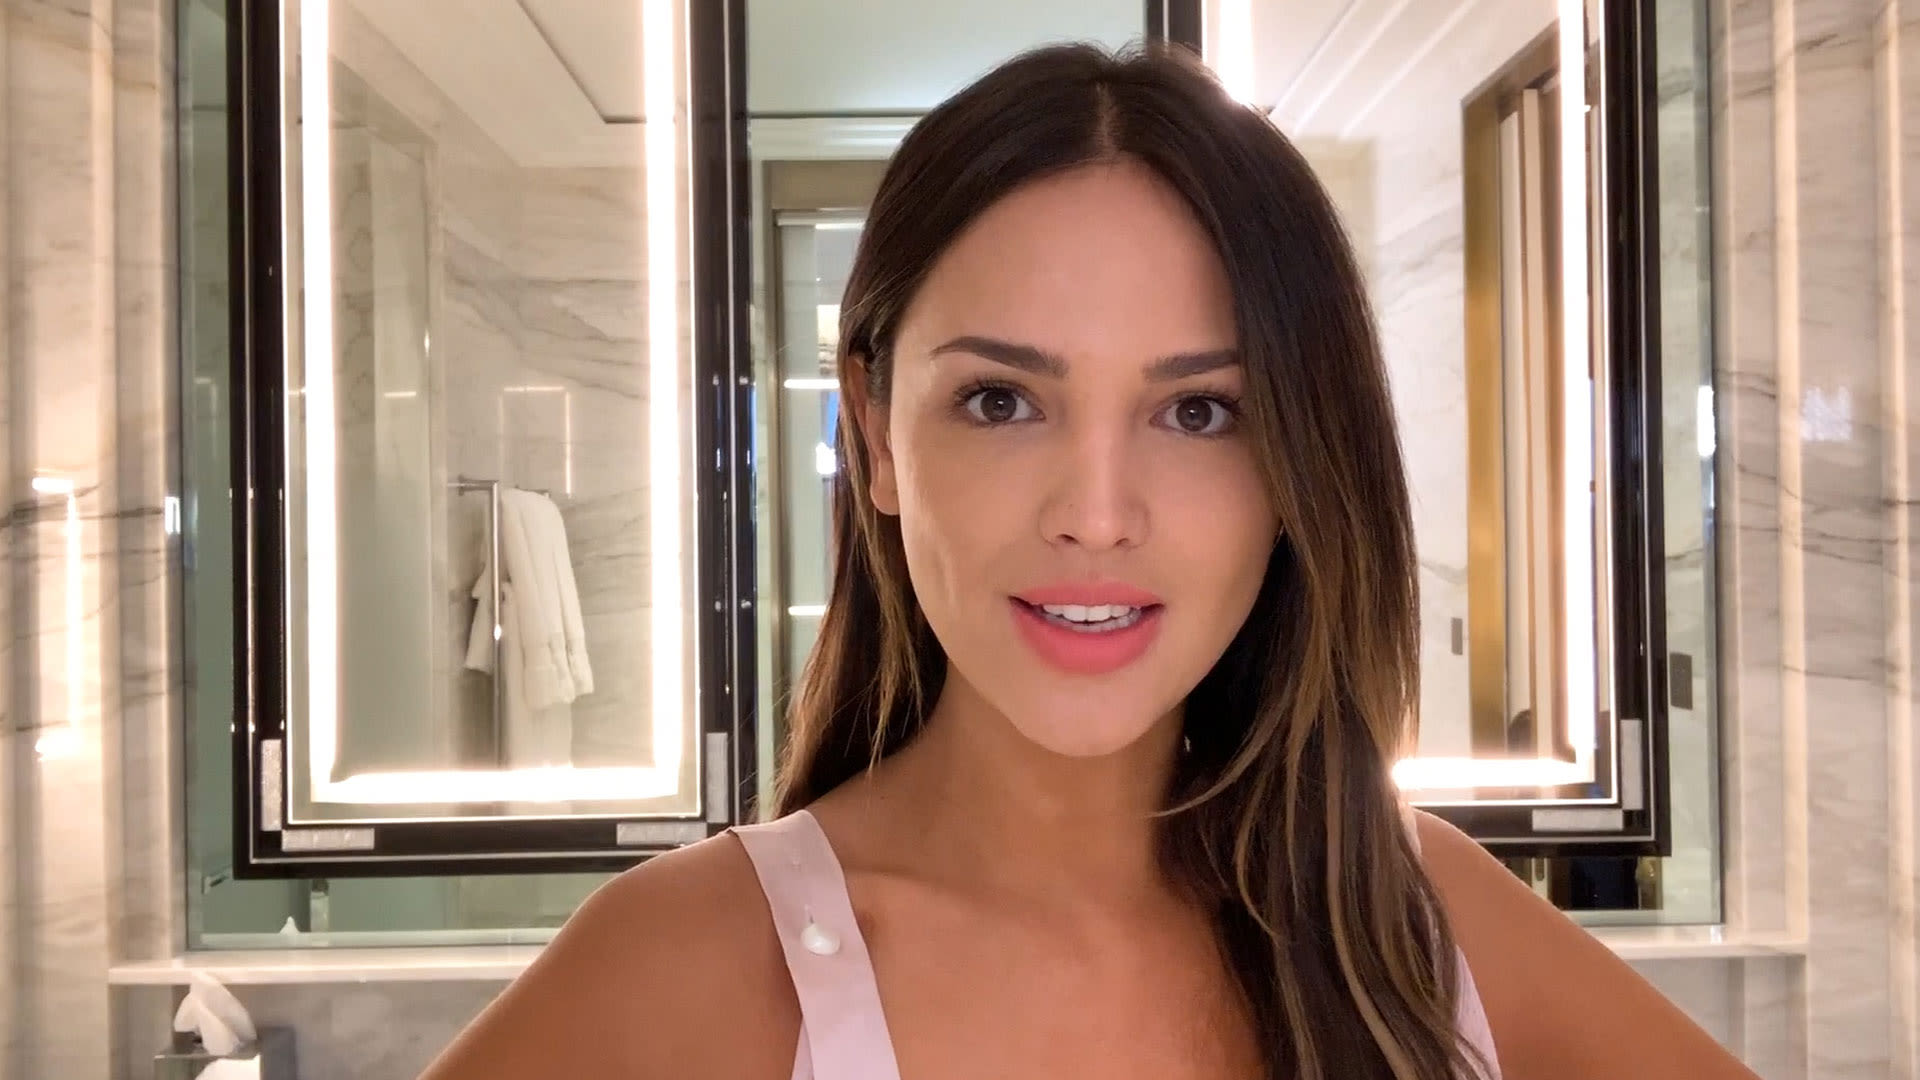 Model Lais Ribeiro Shares Her Nighttime Skin Routine: Video